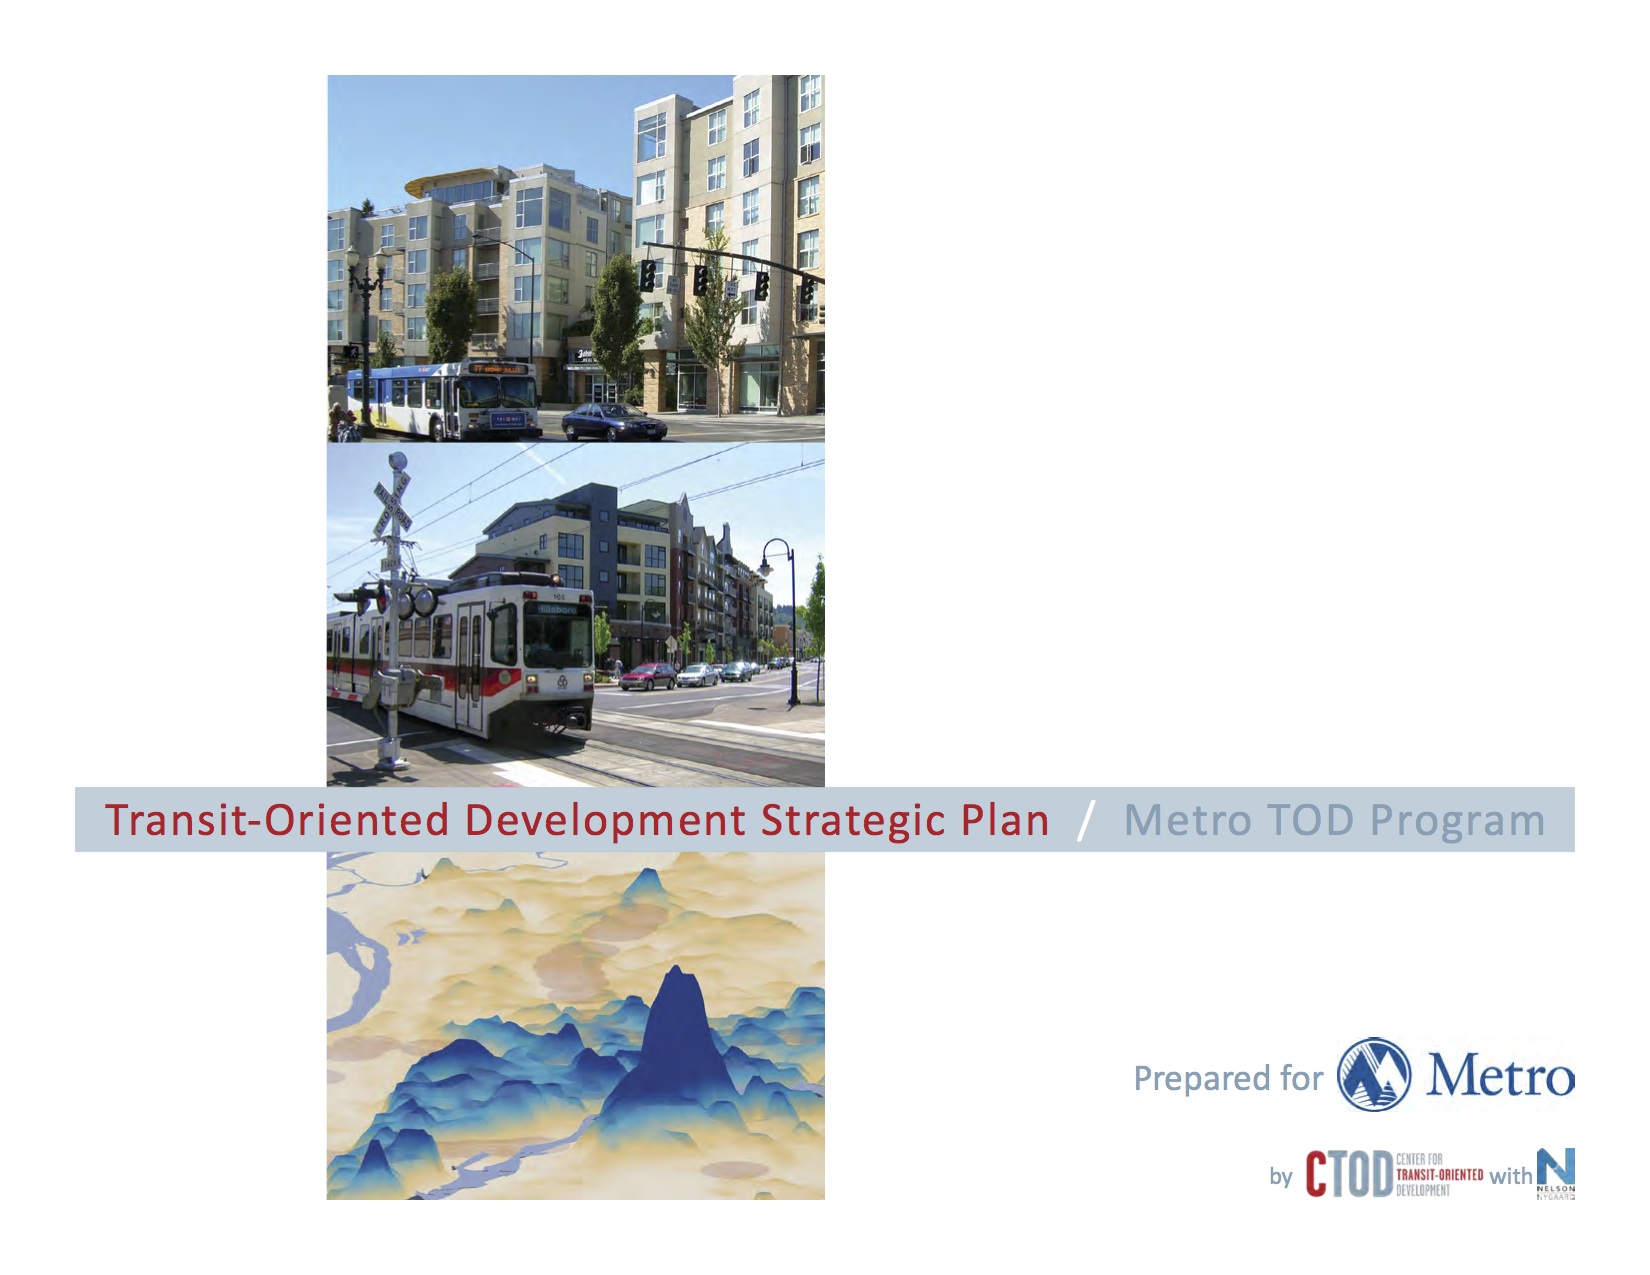 Transit-Oriented Development Strategic Plan for Portland Metro TOD Program